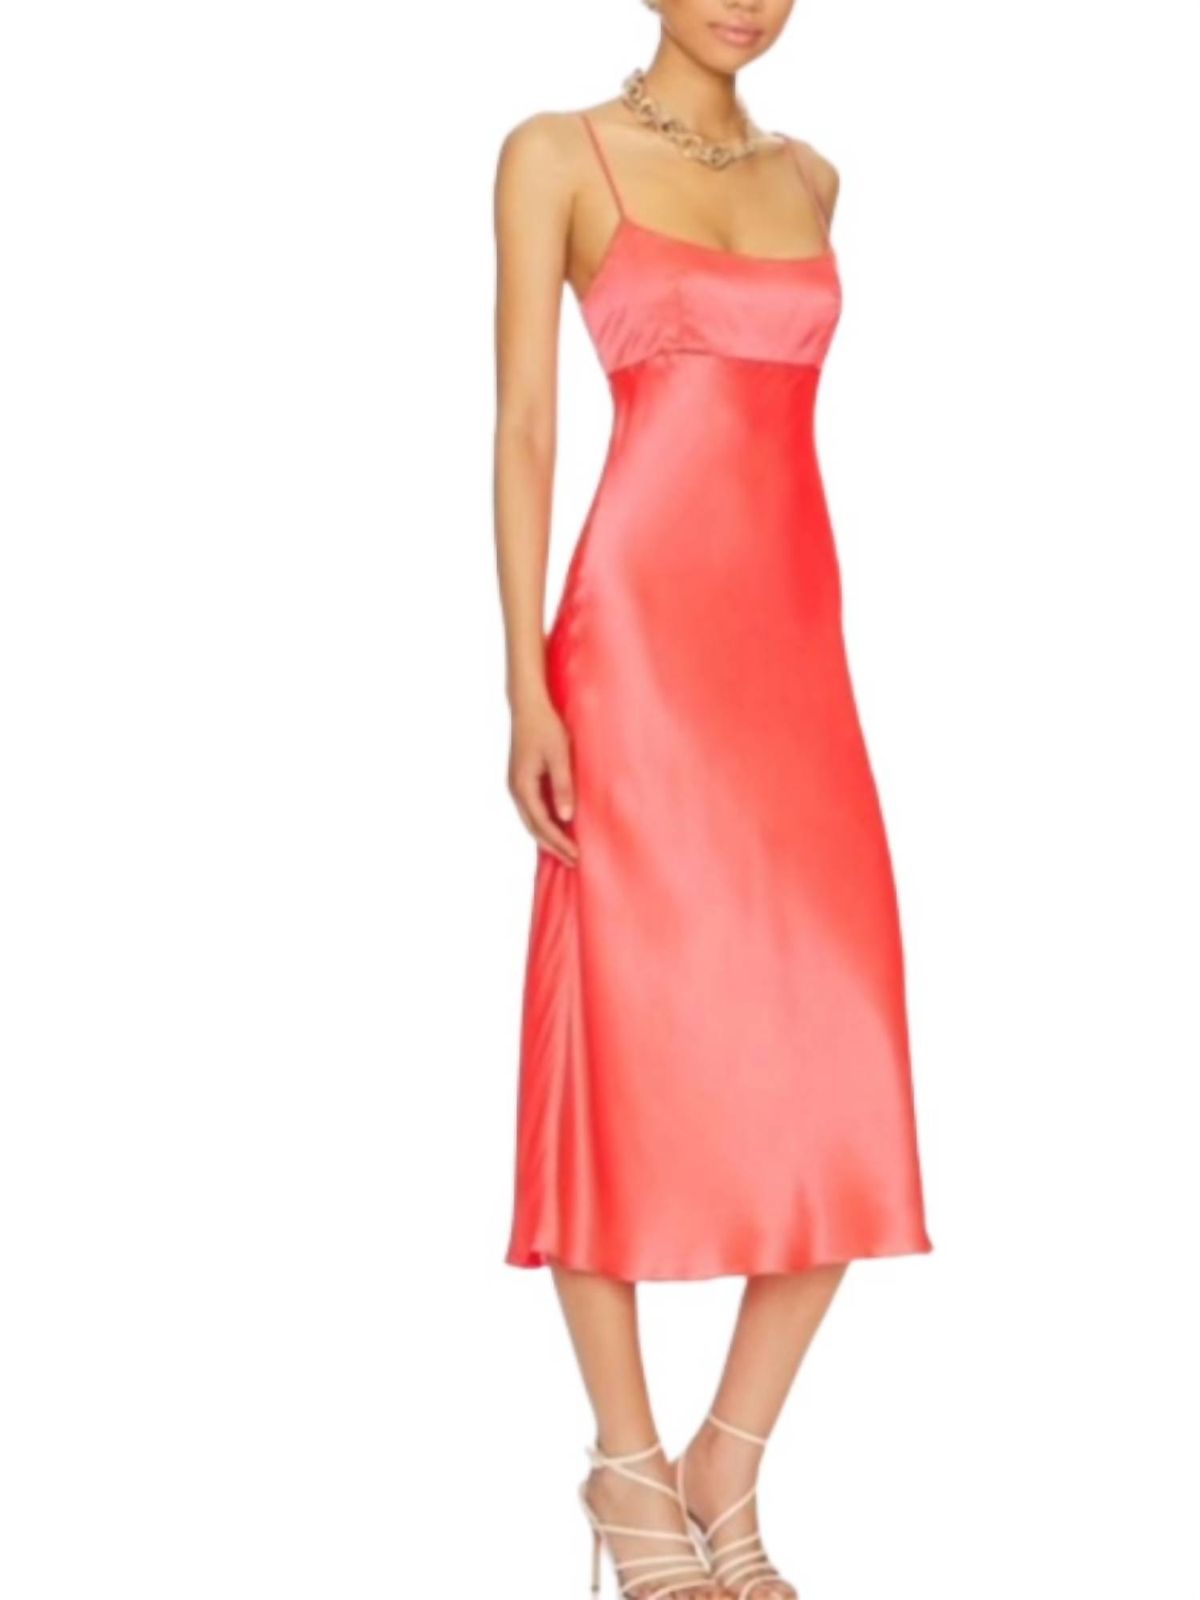 Style 1-2564265600-3855 Amanda Uprichard Size XS Satin Orange Cocktail Dress on Queenly